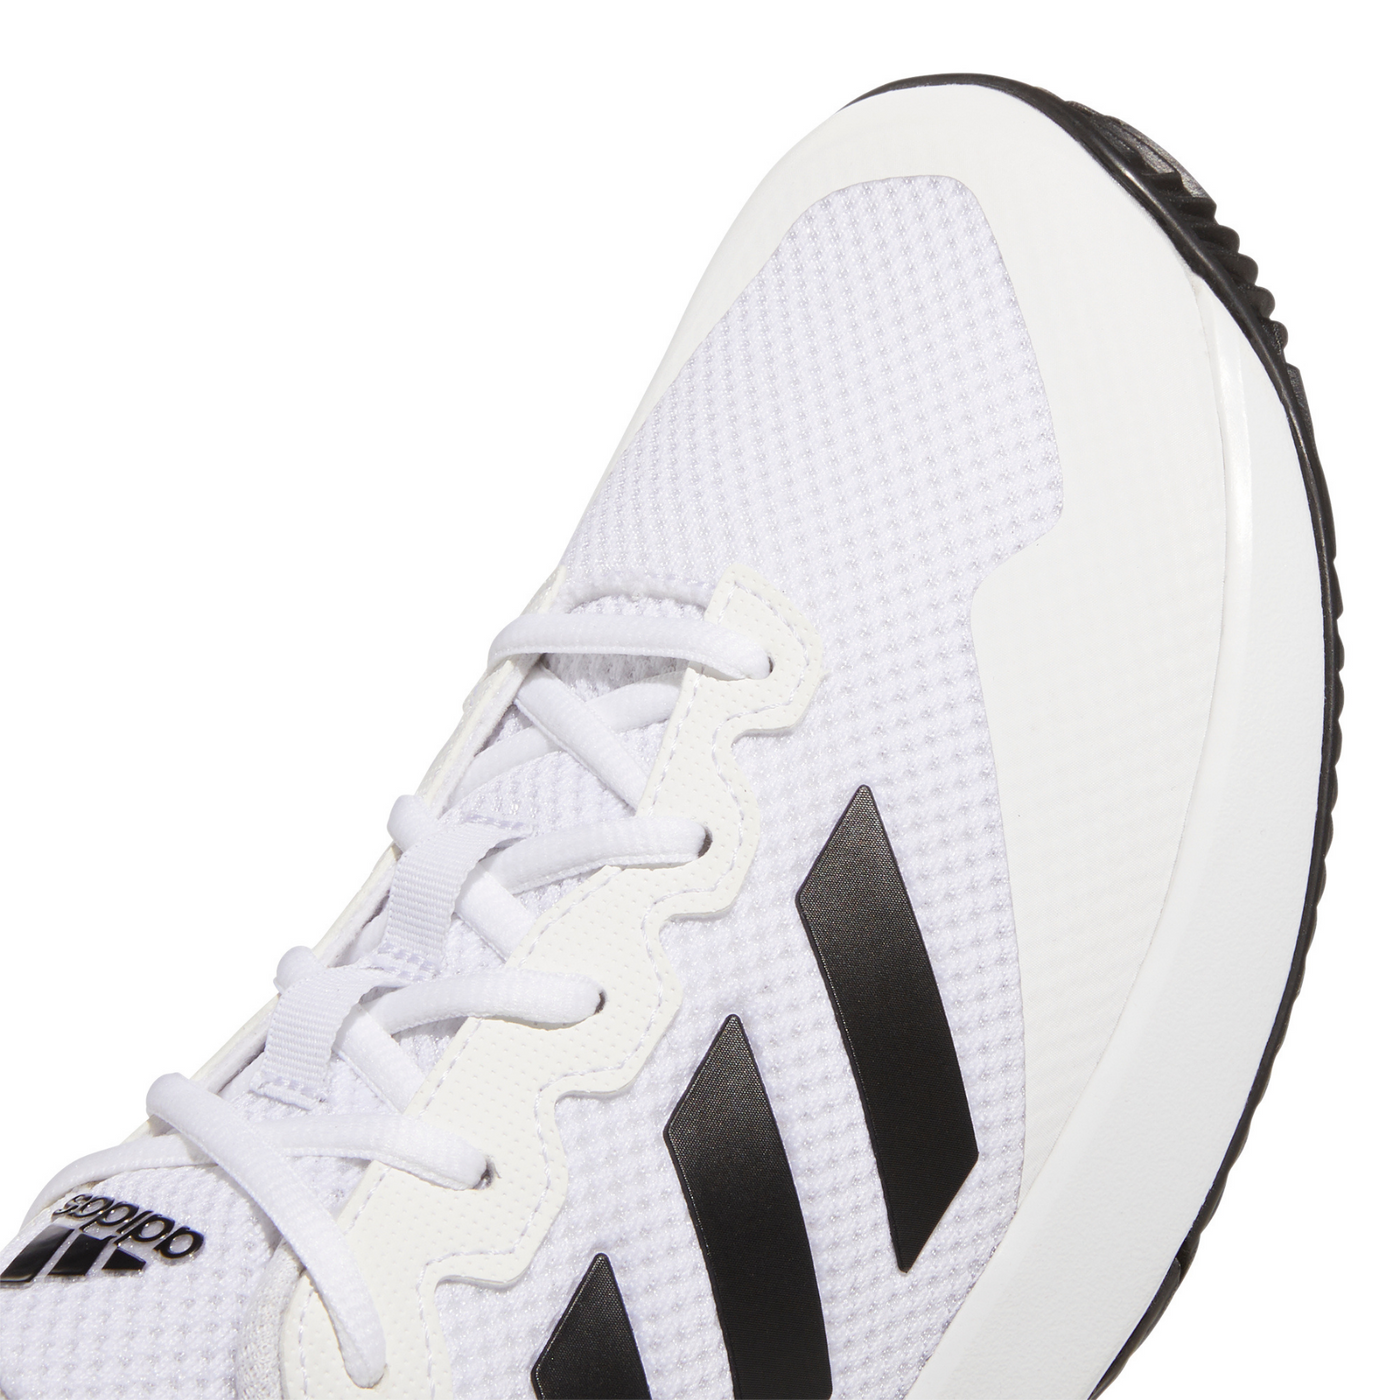 Adidas Game Court 2 Men Tennis Shoes - Cloud White/Core Black/Cloud White